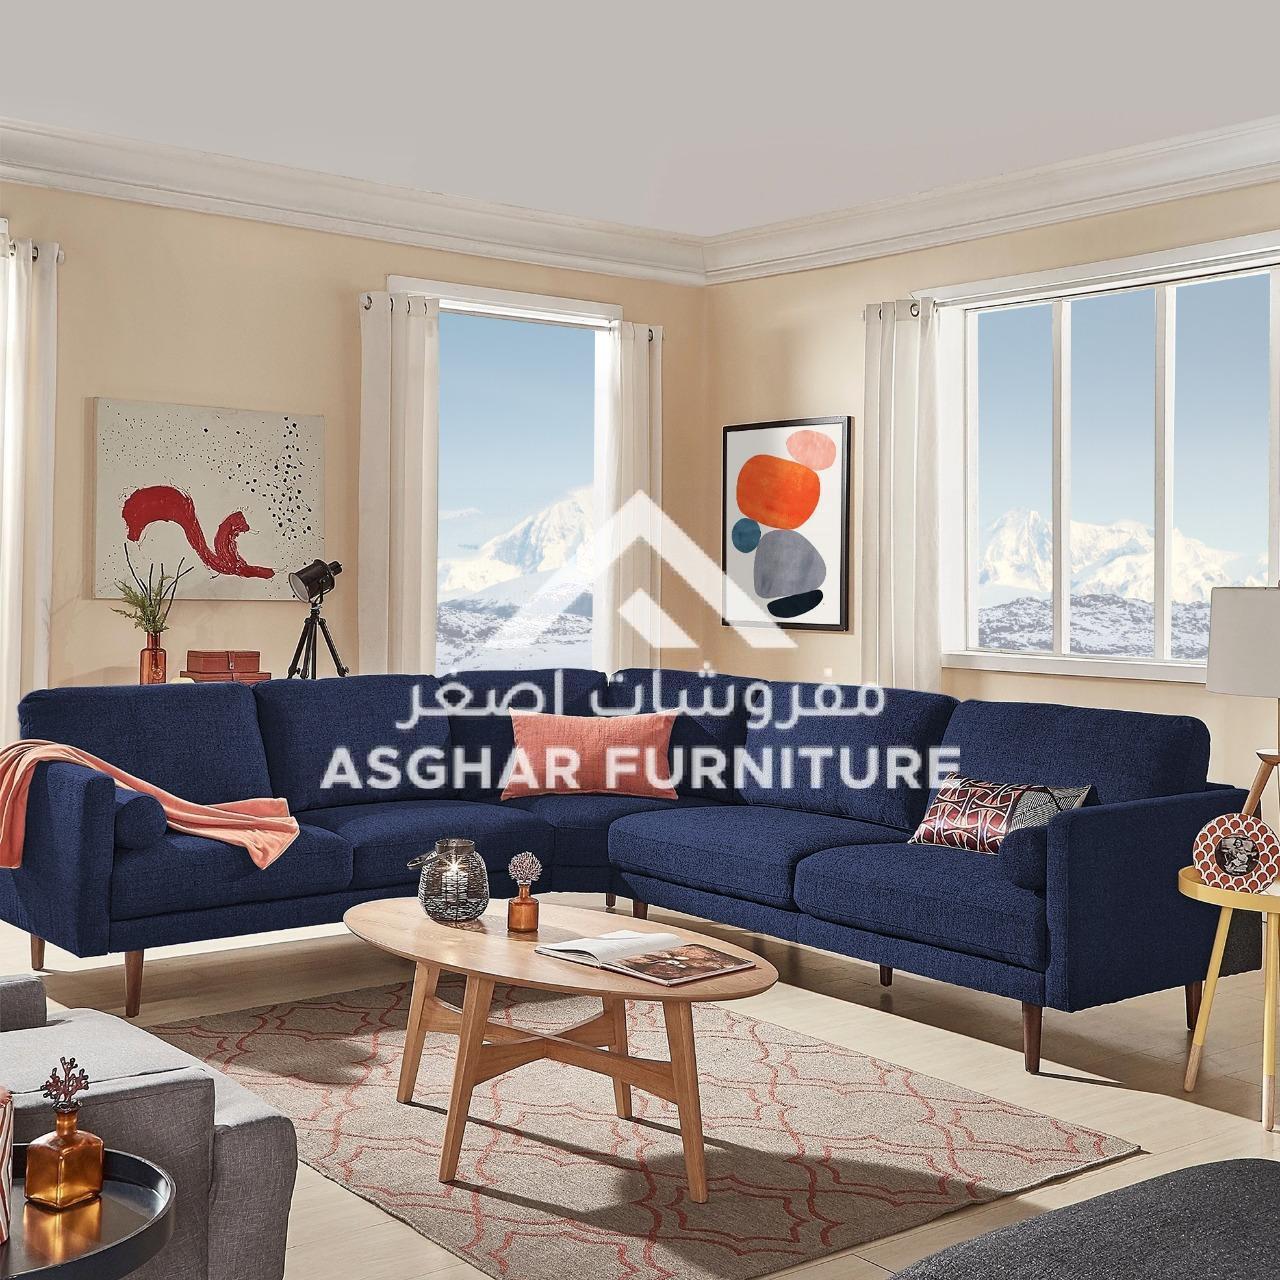 Creek L Shape Sectional Sofa - Asghar Furniture: Shop Online Home Furniture  Across UAE - Dubai, Abu Dhabi, Al Ain, Fujairah, Ras Al Khaimah, Ajman,  Sharjah.